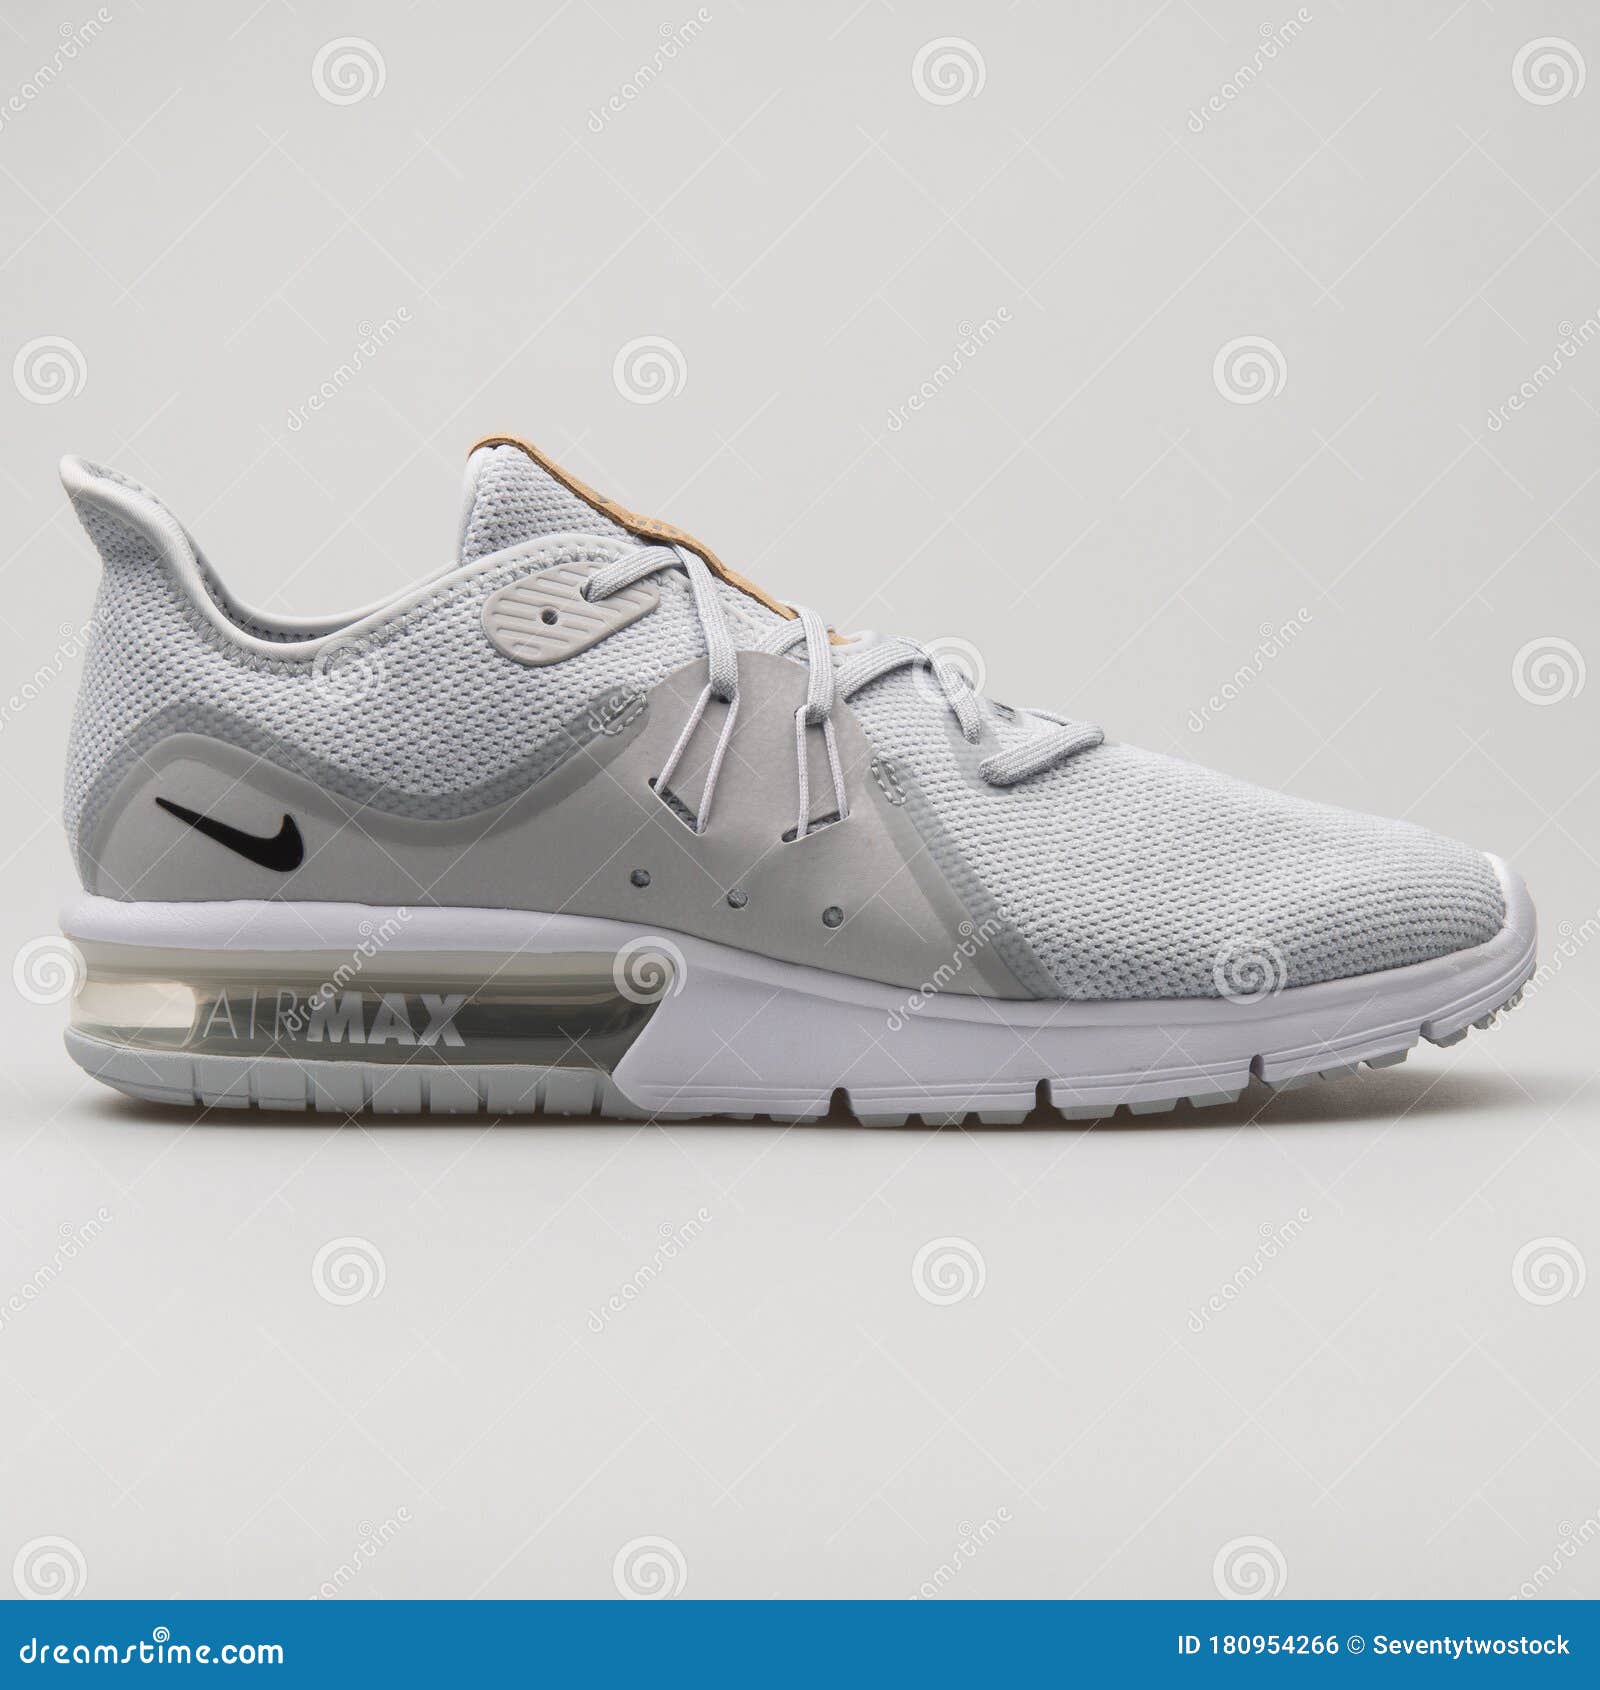 Nike Max Sequent 3 Platinum Sneaker Photo - Image of shoe, kicks: